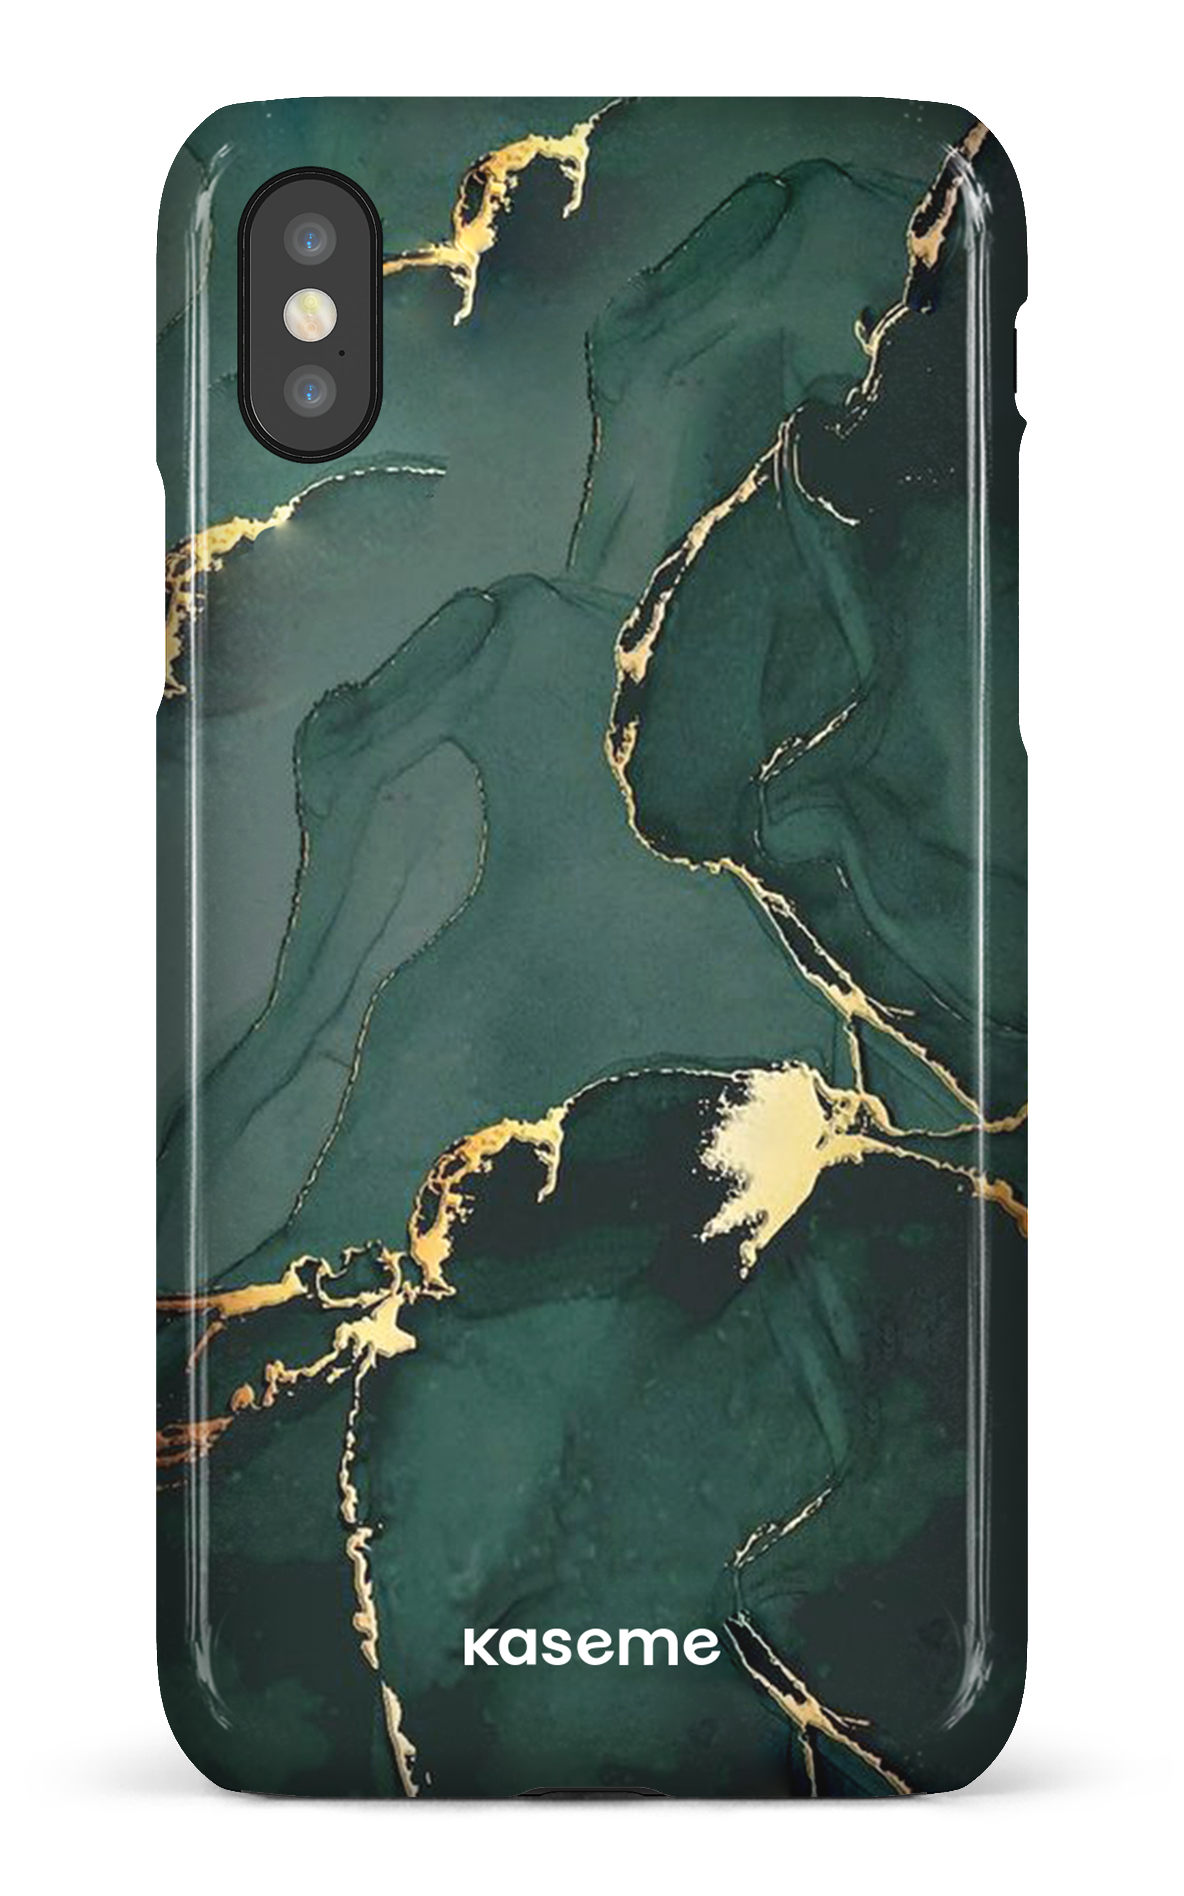 Jade - iPhone X/XS